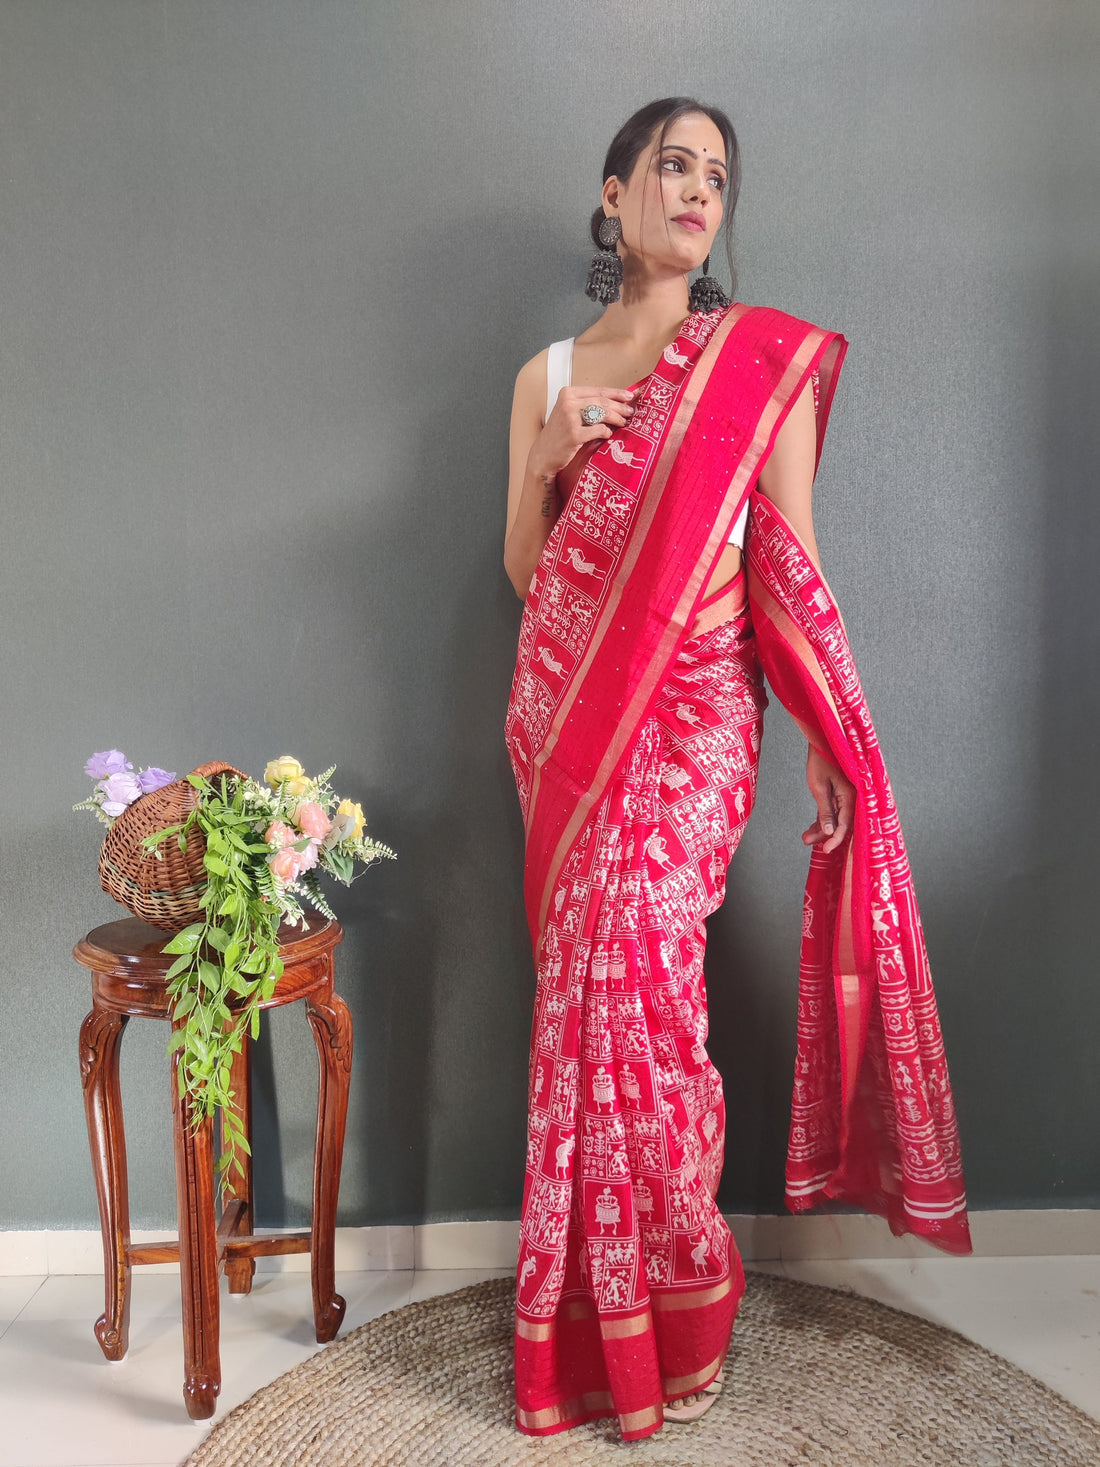 1-Min Ready To Wear Latest Shriivanta Design Saree – Red